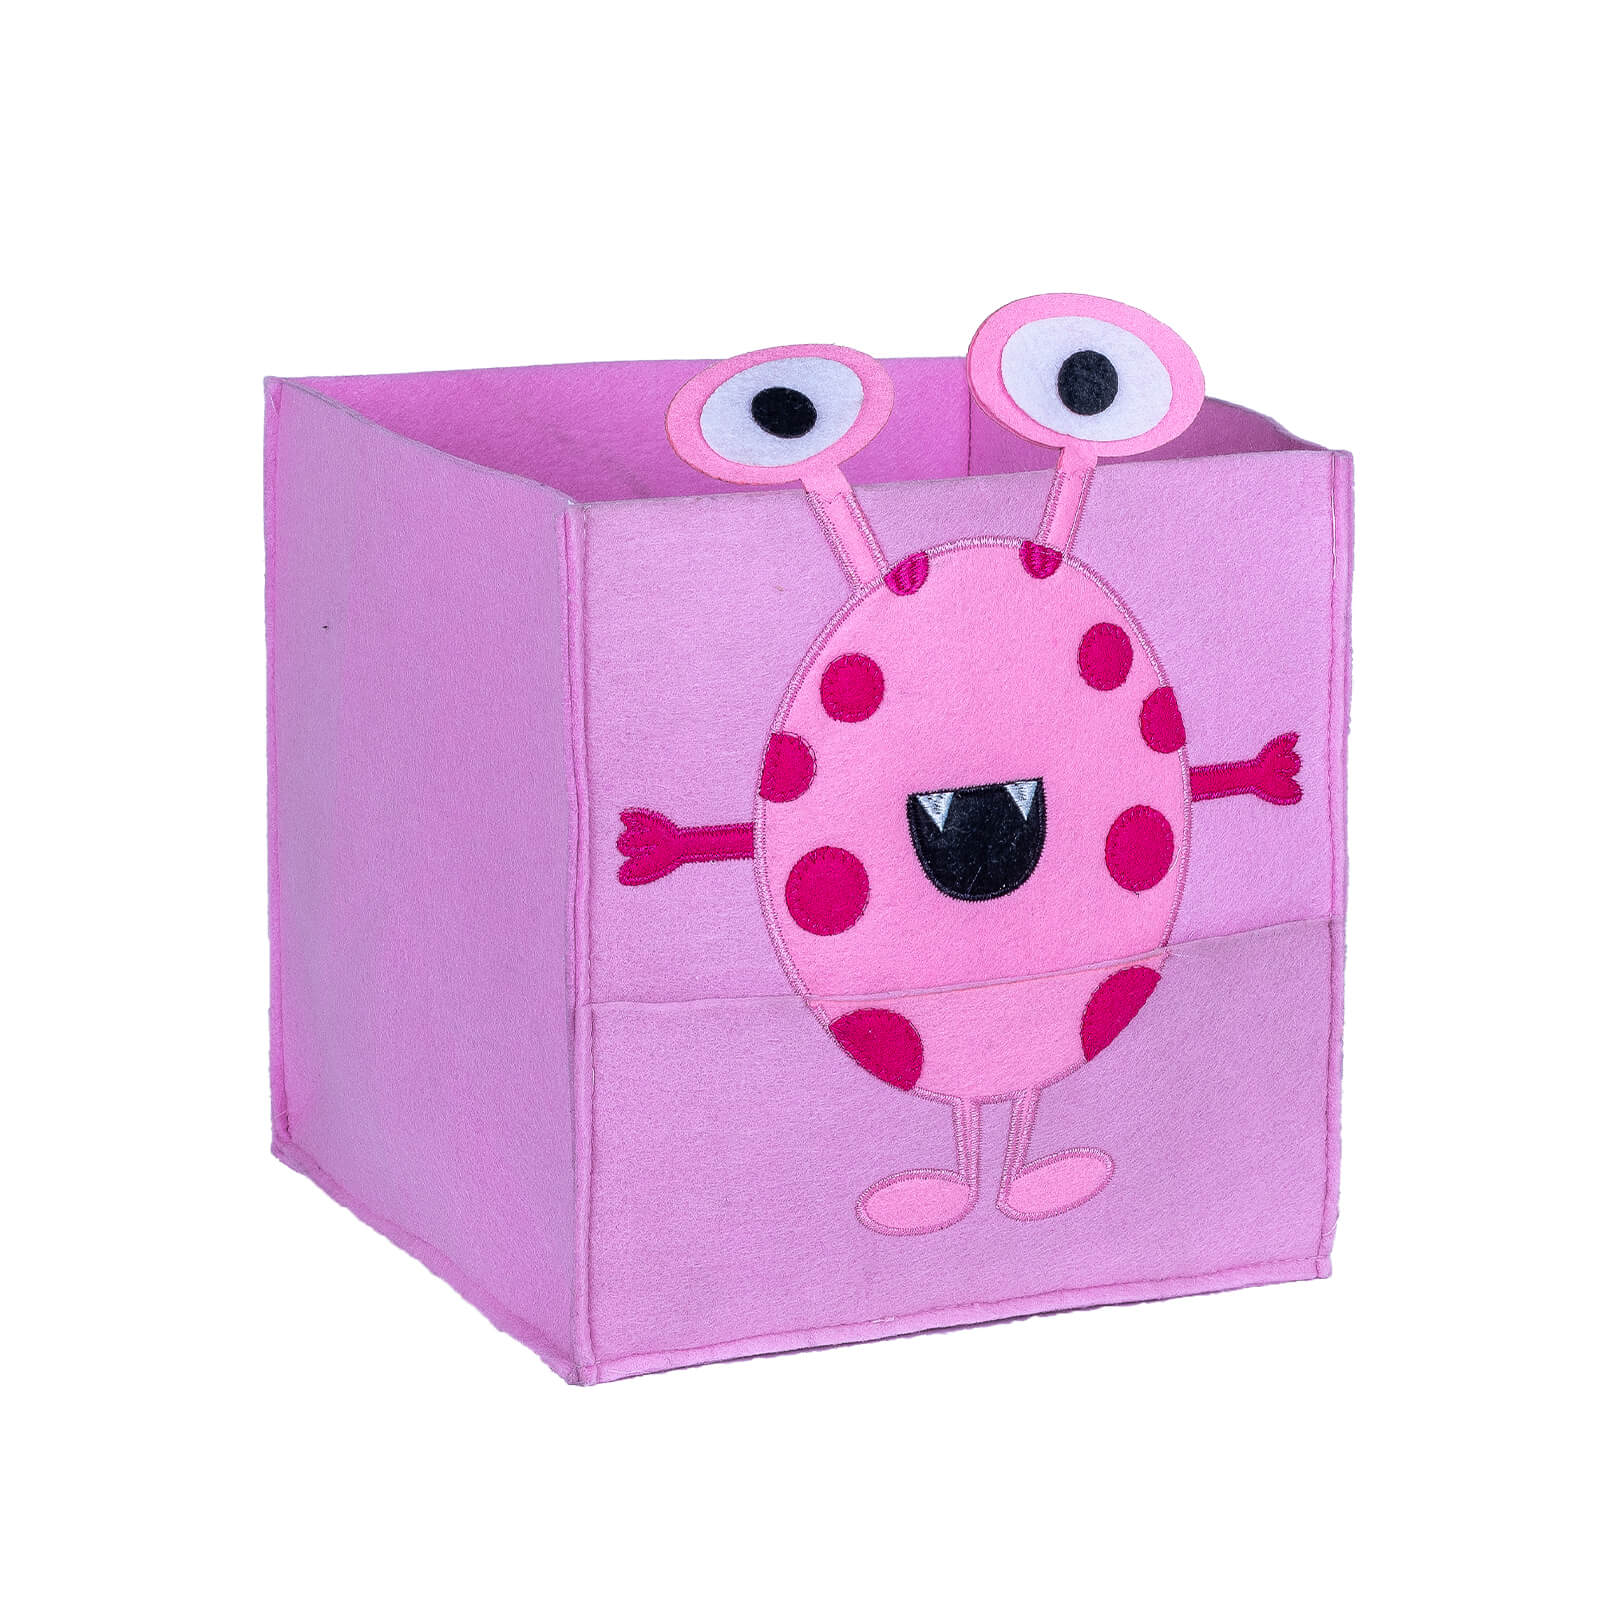 Flexi Storage Kids Compact Fabric Insert - Pink Monster